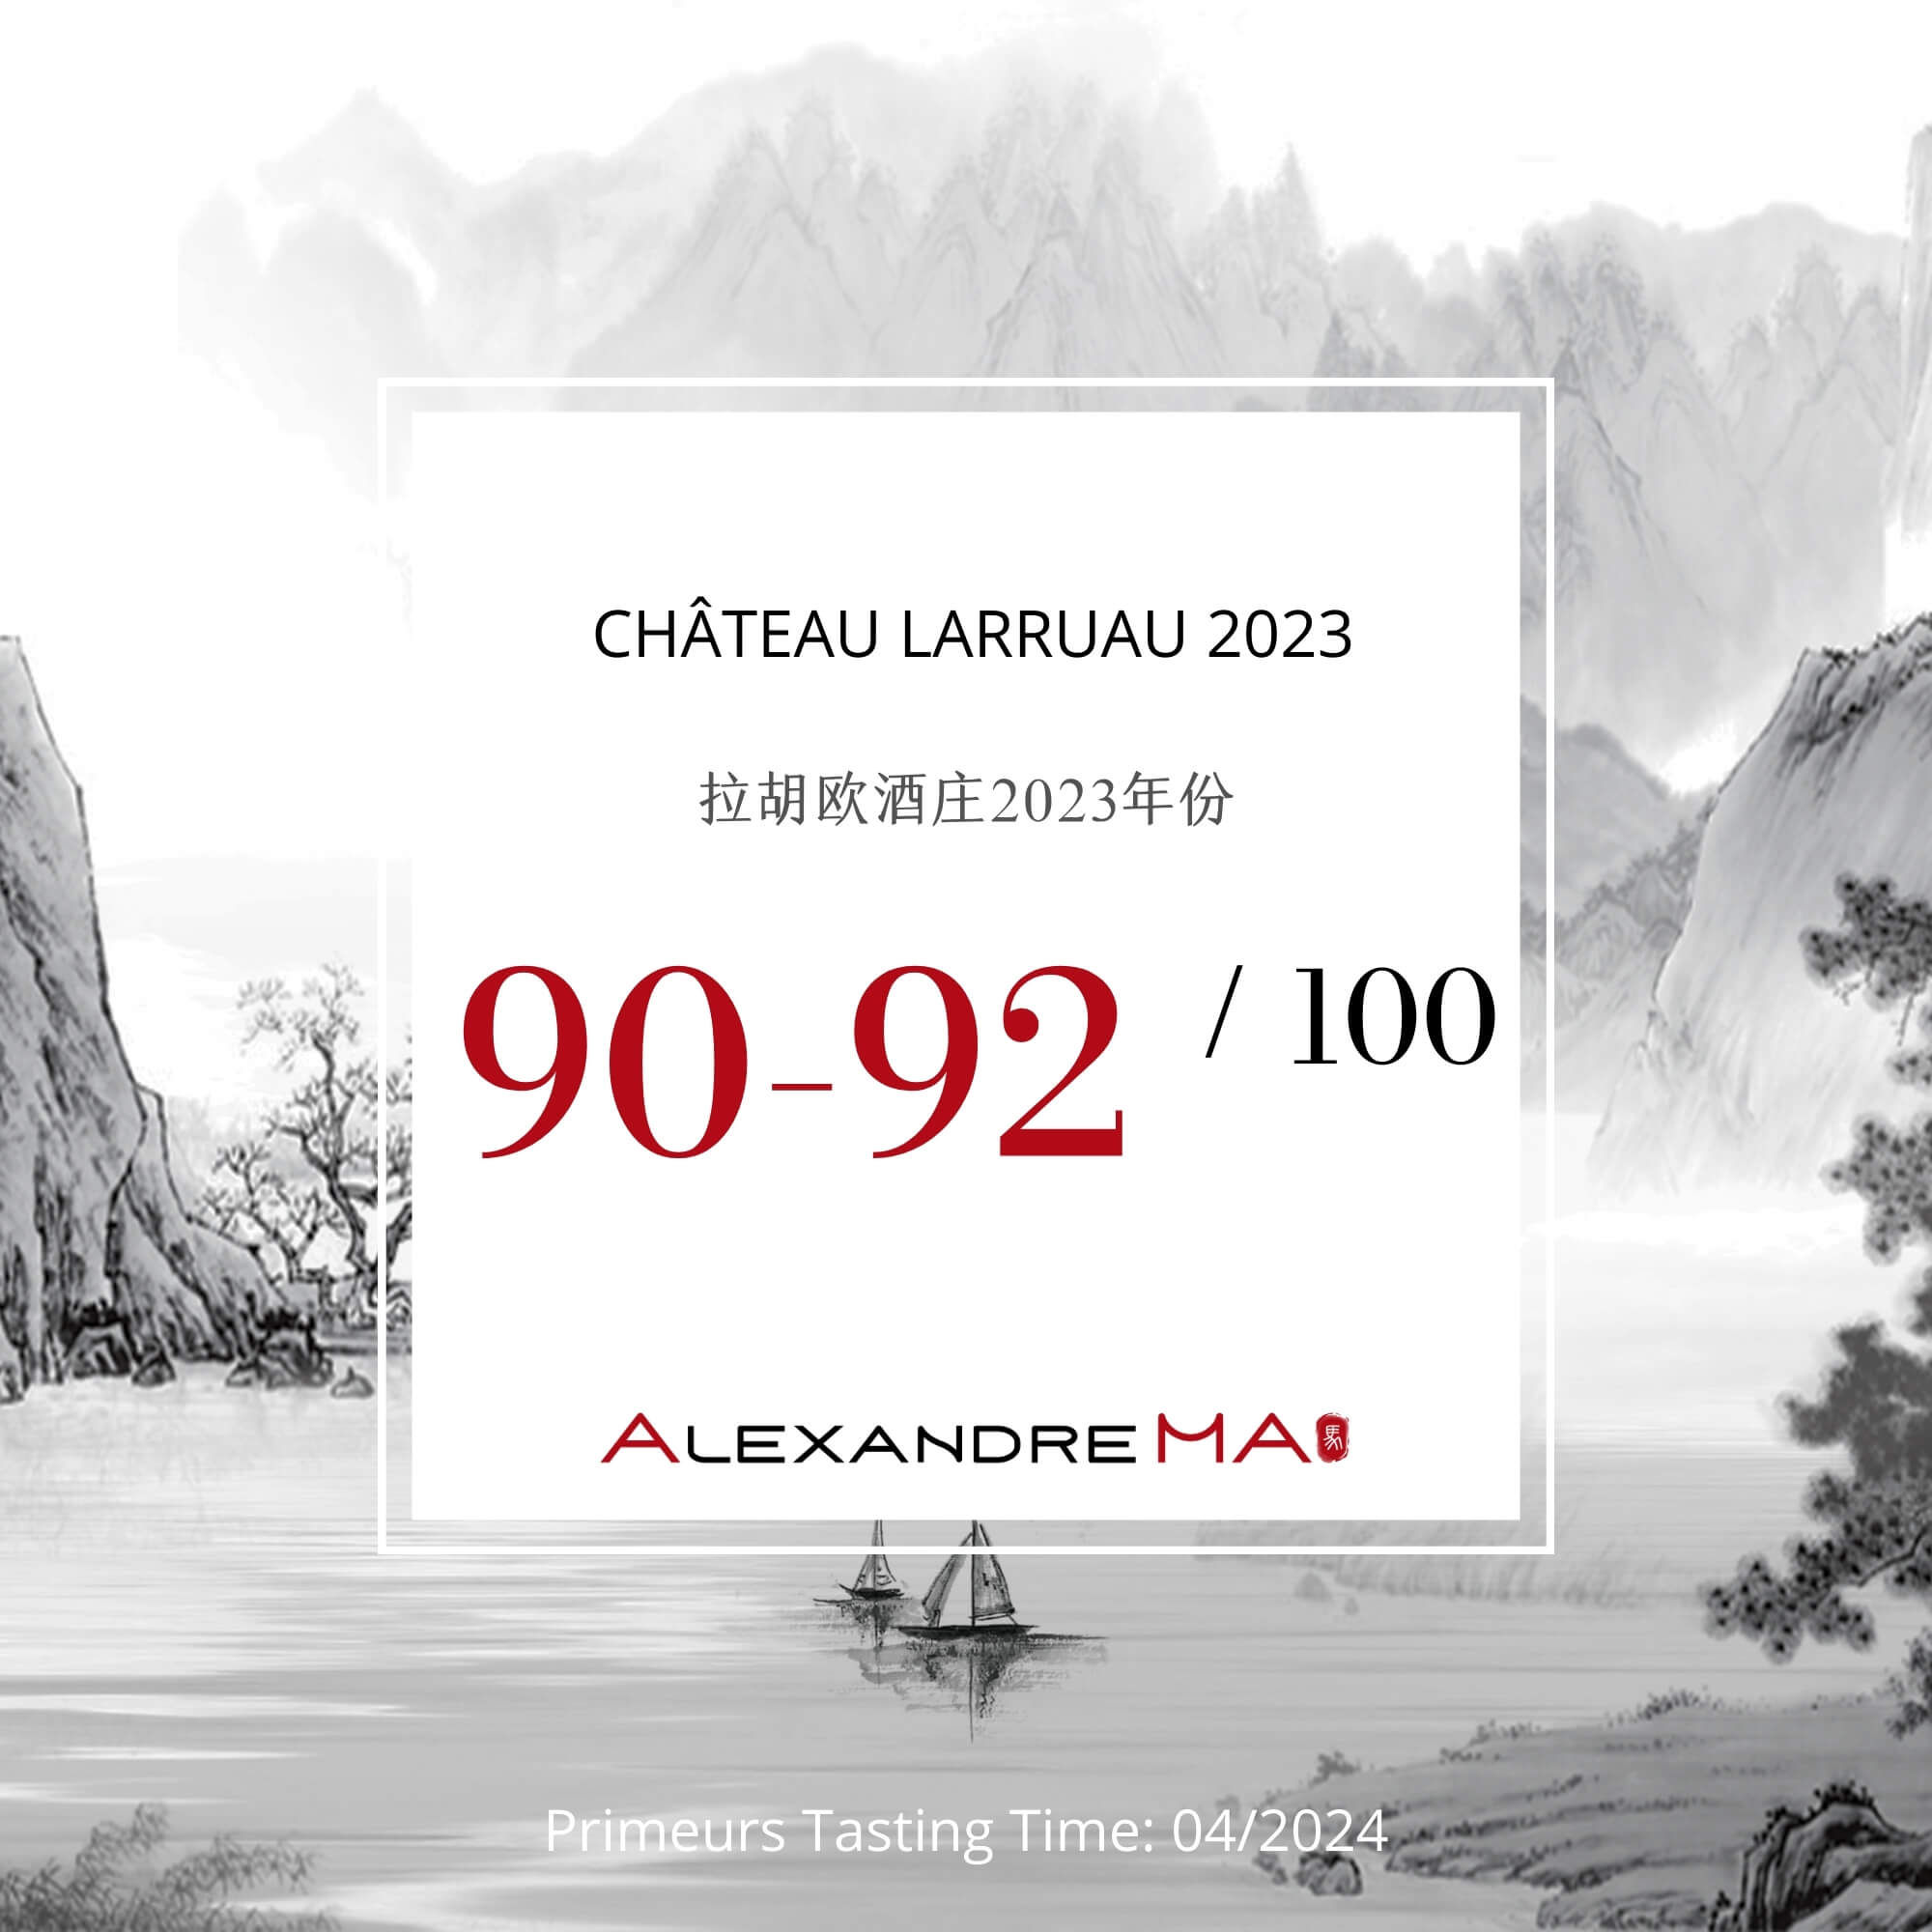 Château Larruau 2023 Primeurs - Alexandre MA